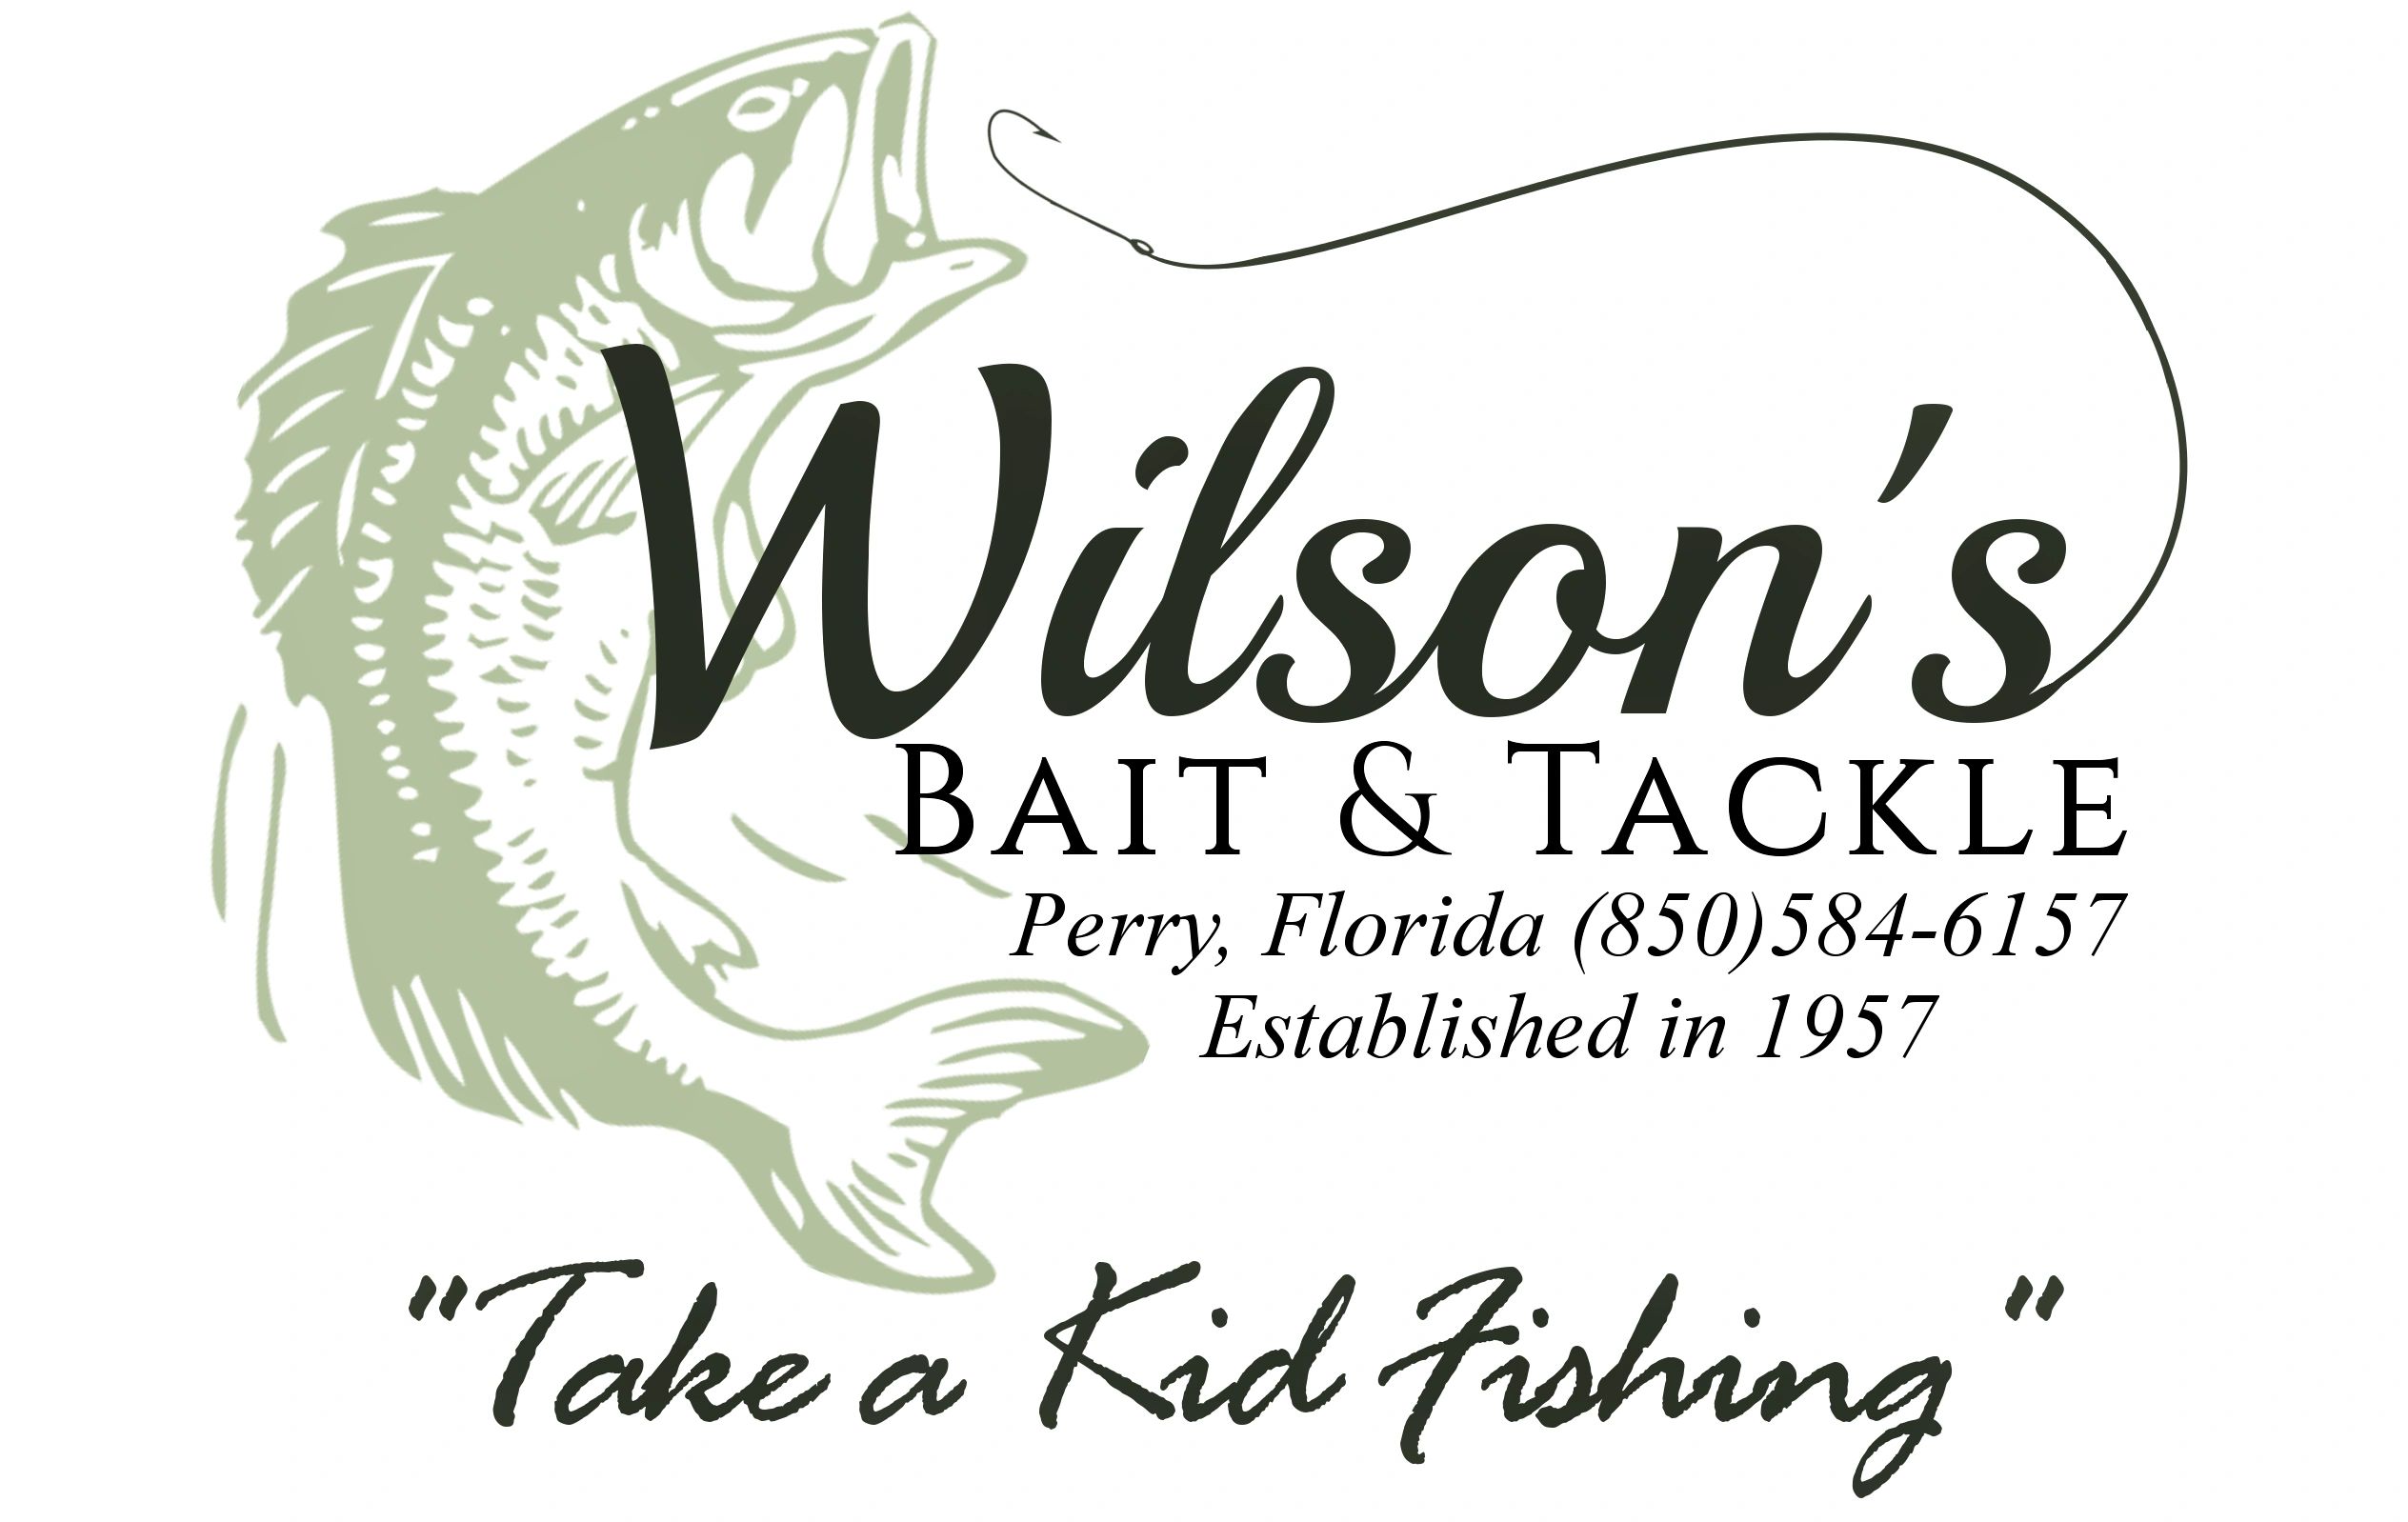 Wilson's Bait & Tackle - Fishing, Hunting